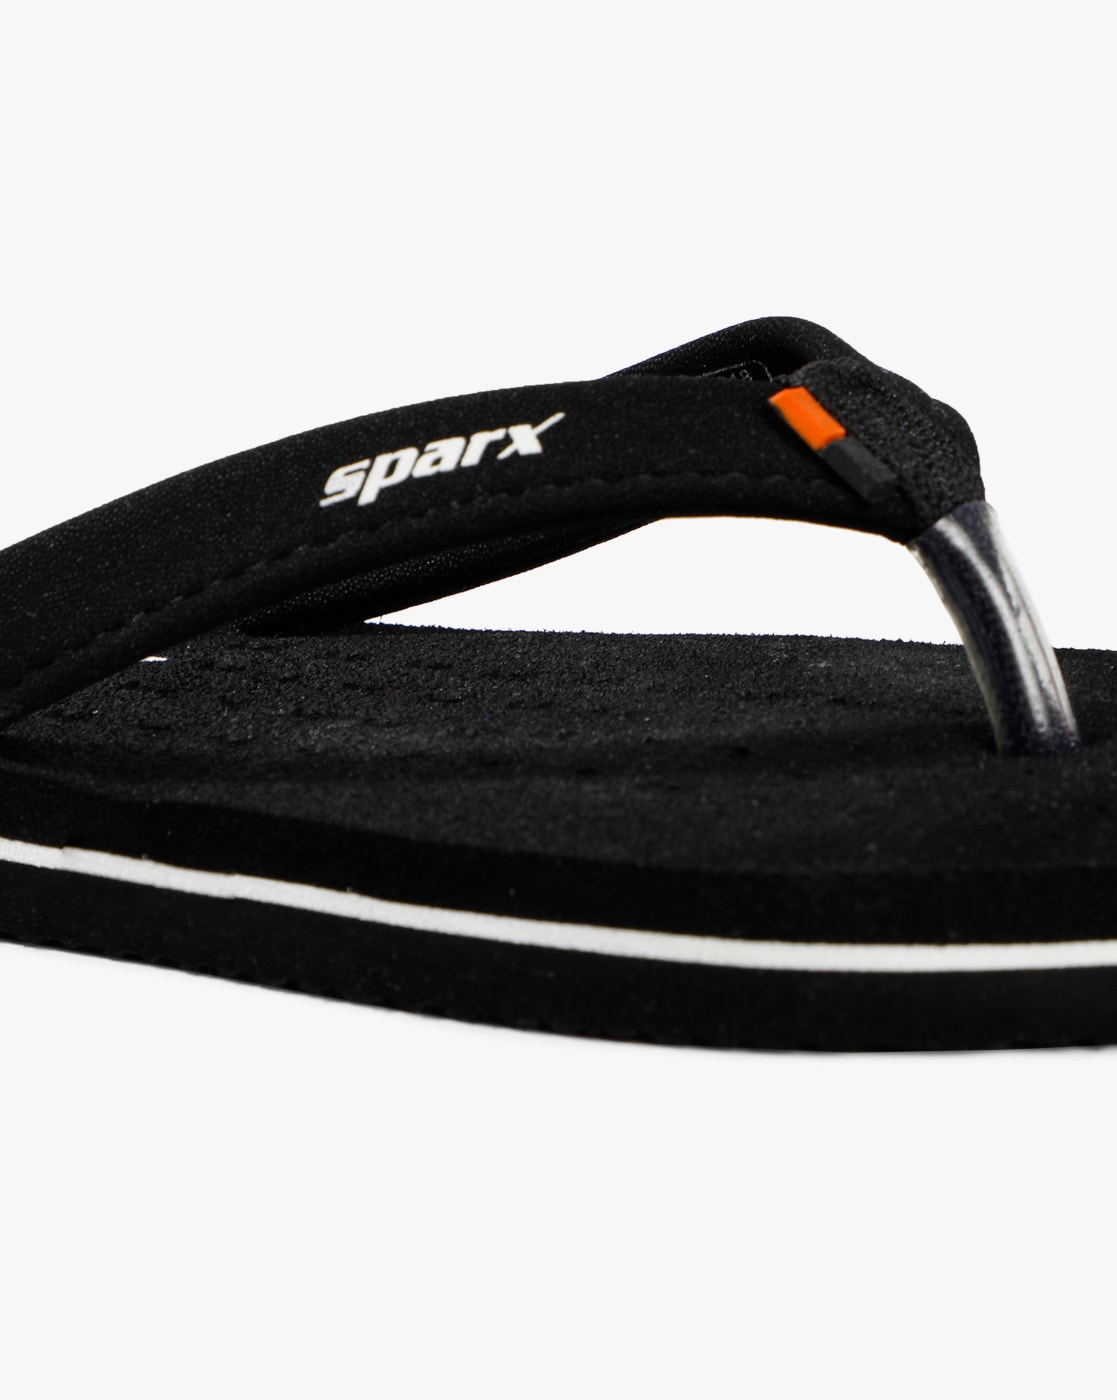 Sparx Slippers | Sparx Mens Slippers | Sparx SFG204-thanhphatduhoc.com.vn